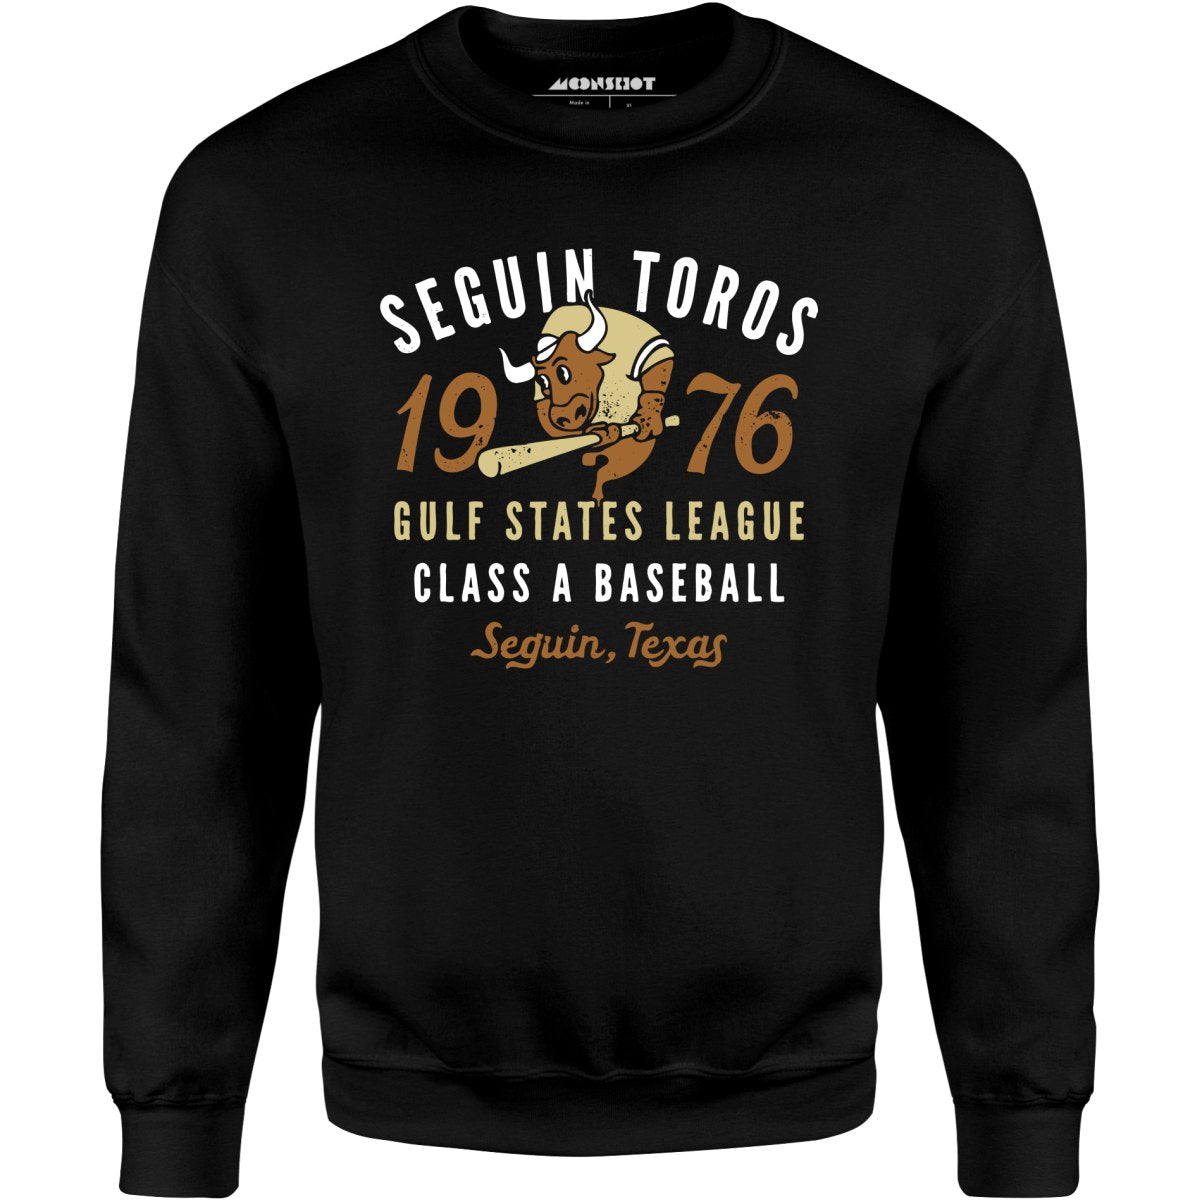 Seguin Toros - Texas - Vintage Defunct Baseball Teams - Unisex Sweatshirt